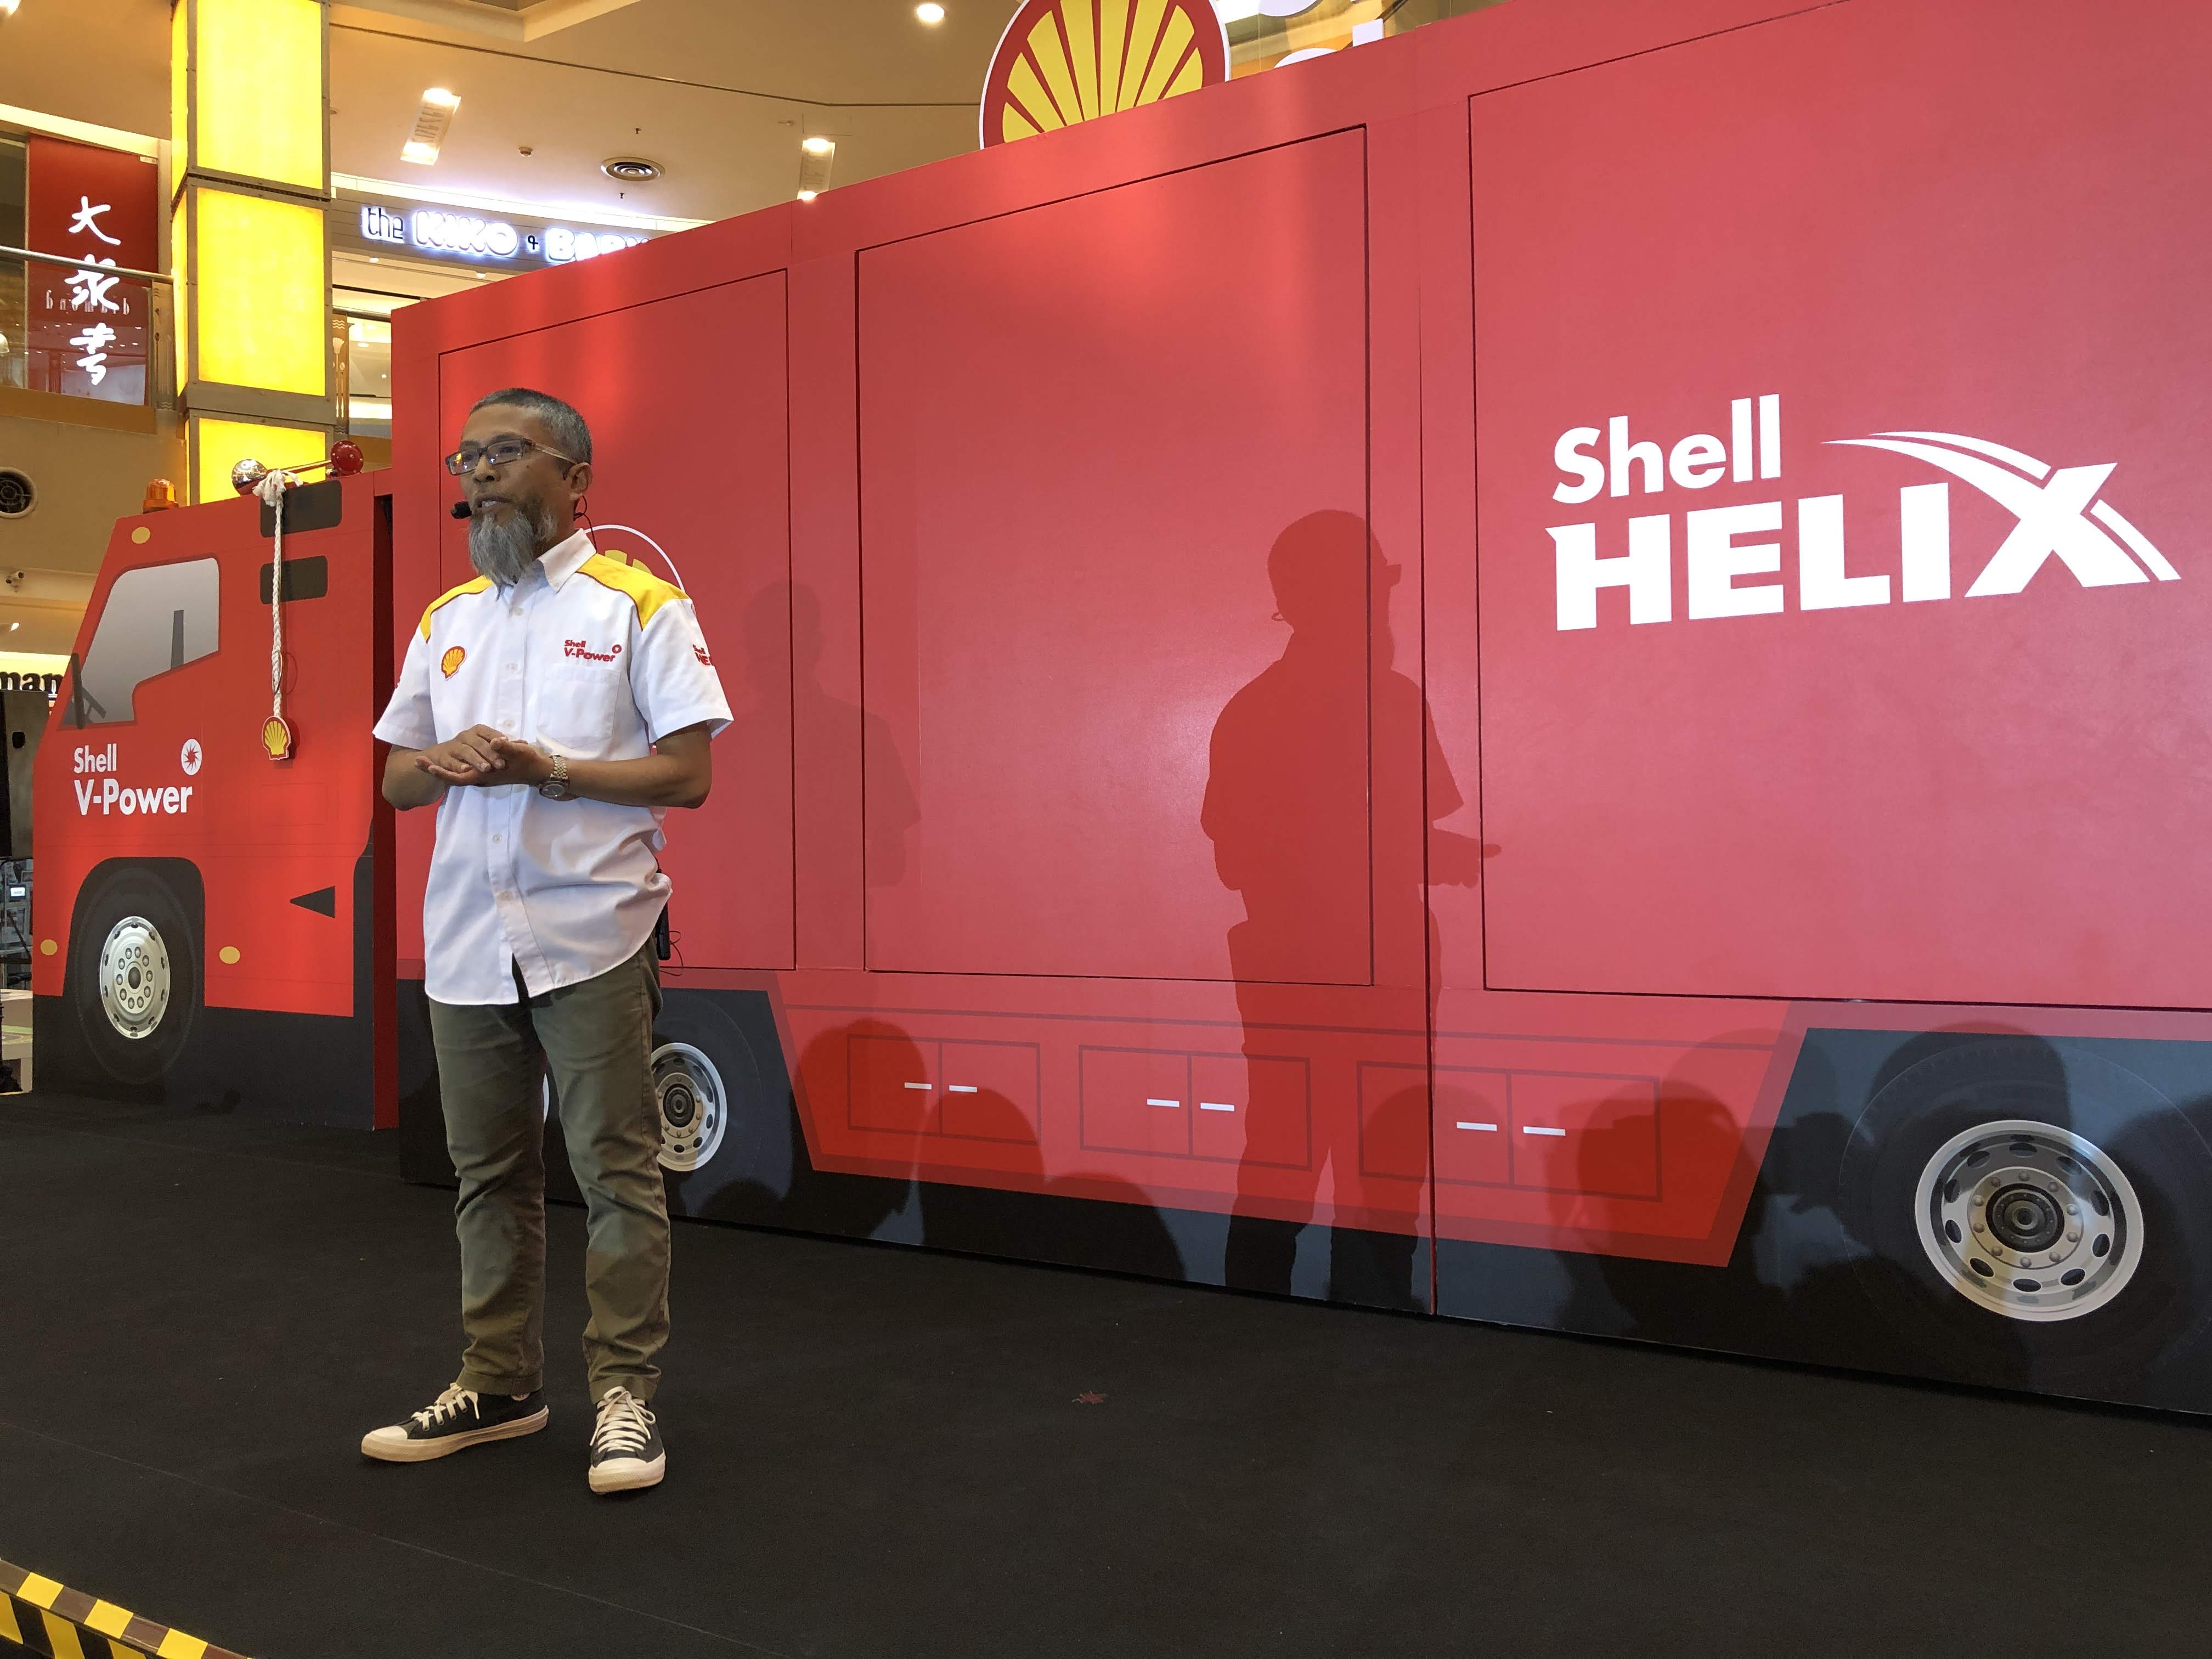 shell ferrari car collection 2019